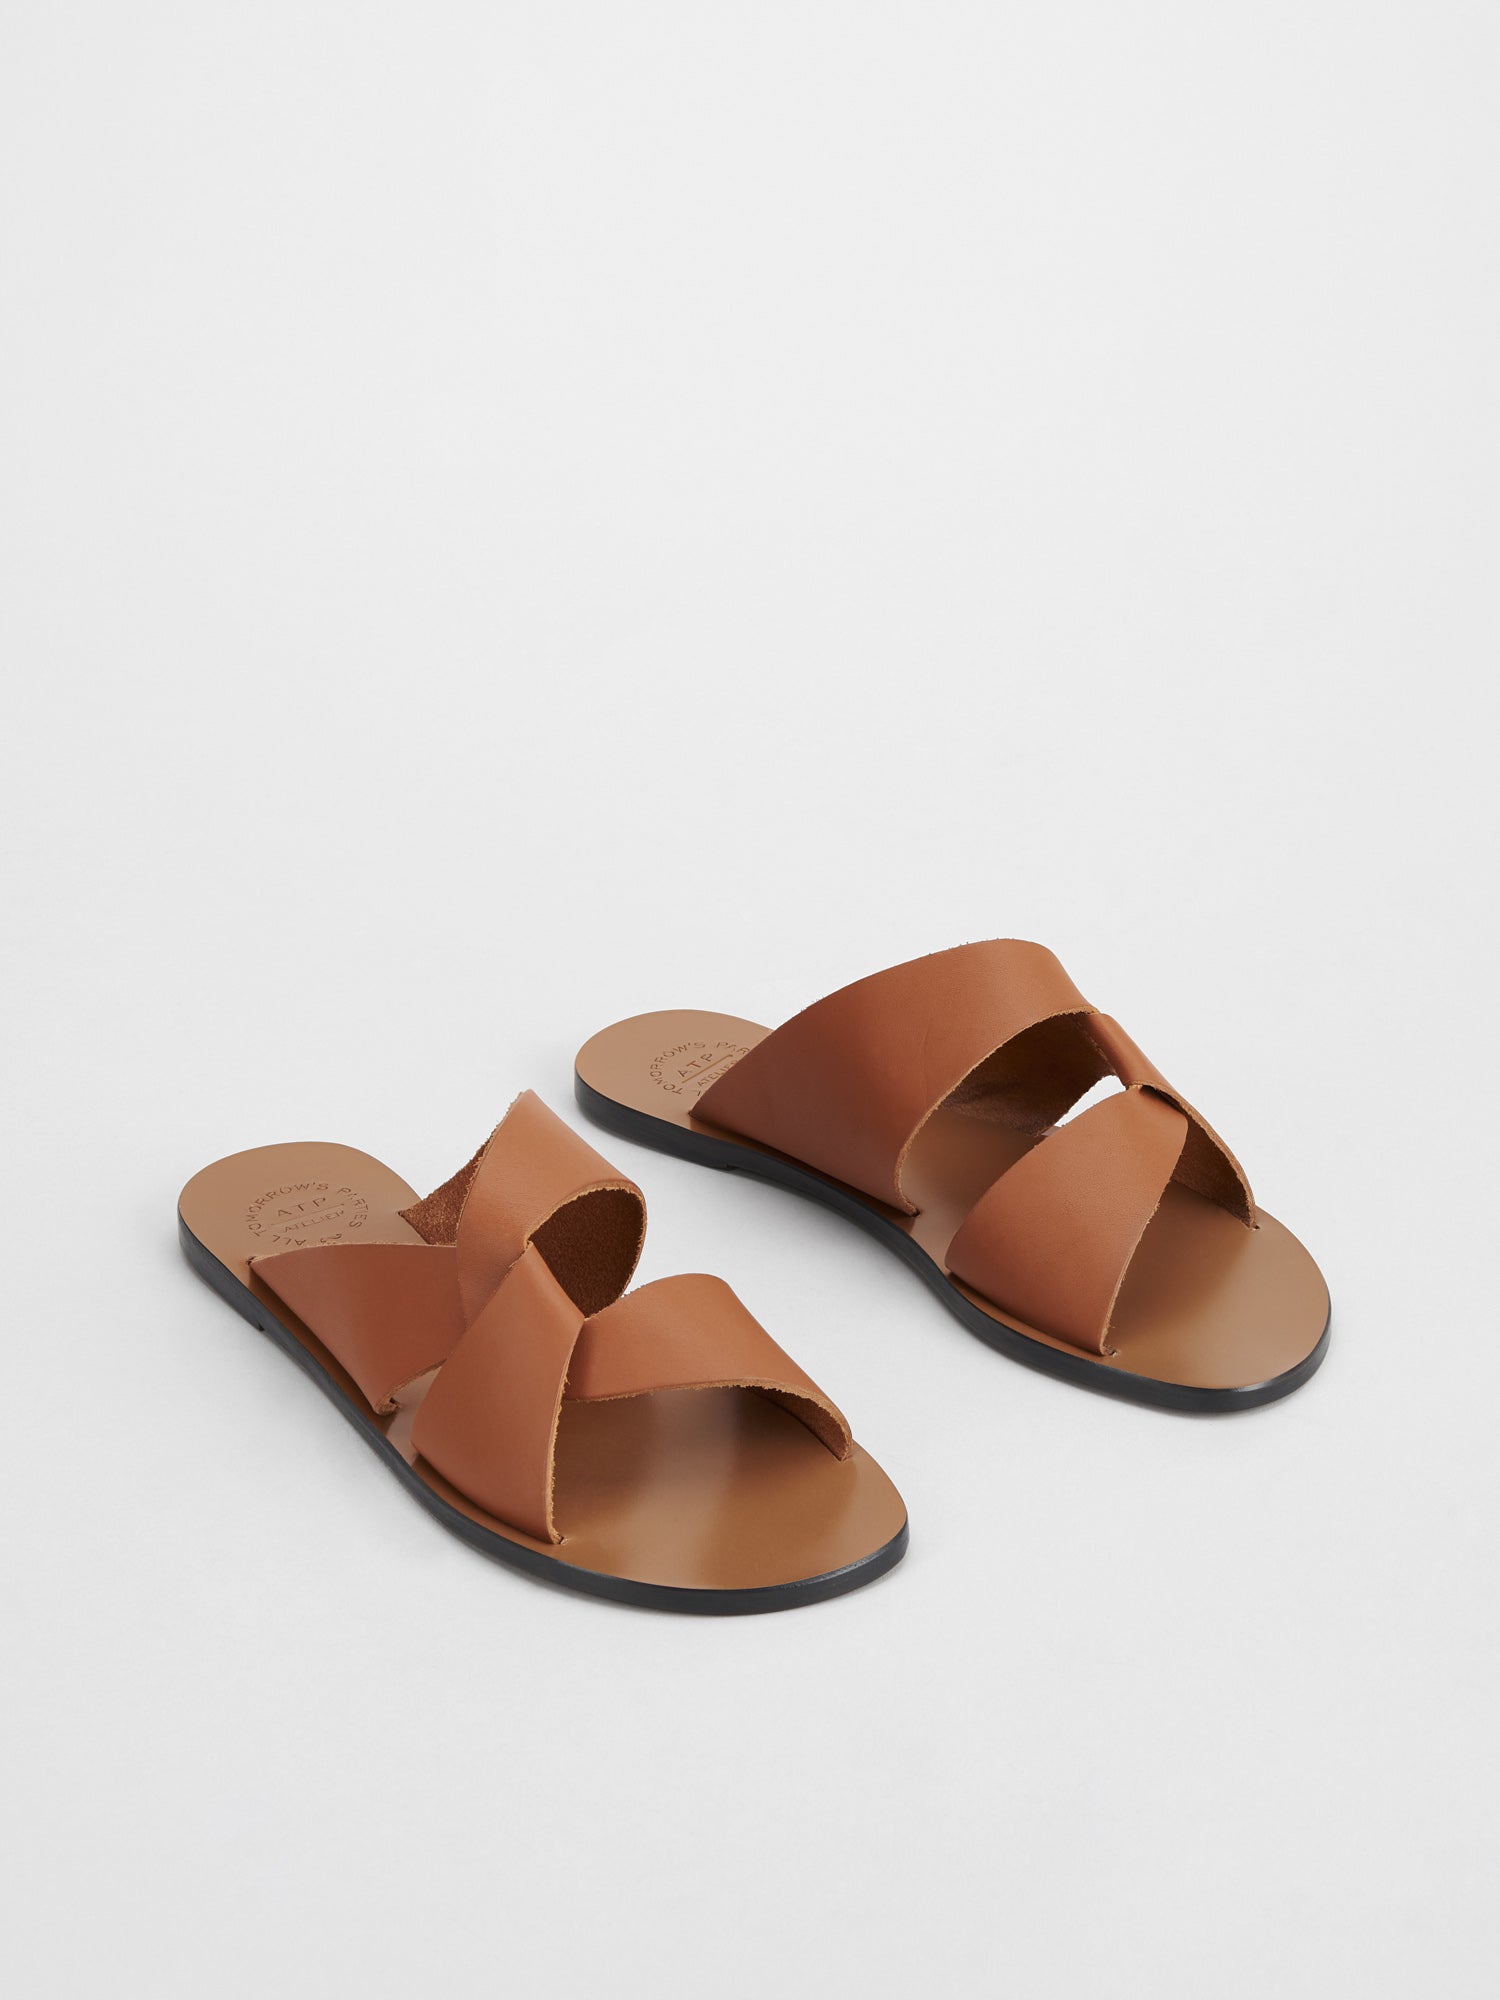 Allai Brandy Leather Flat sandals